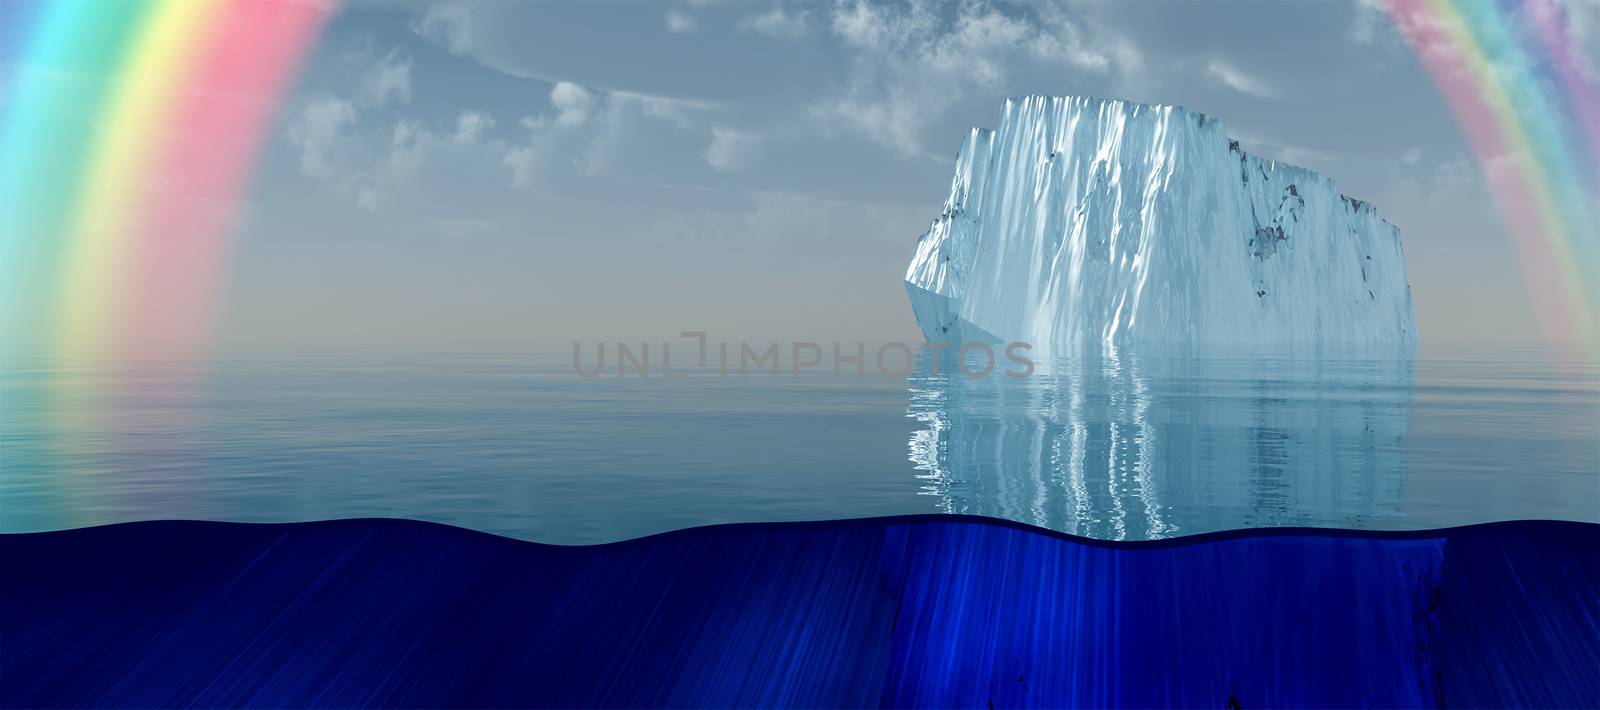 Iceberg by applesstock